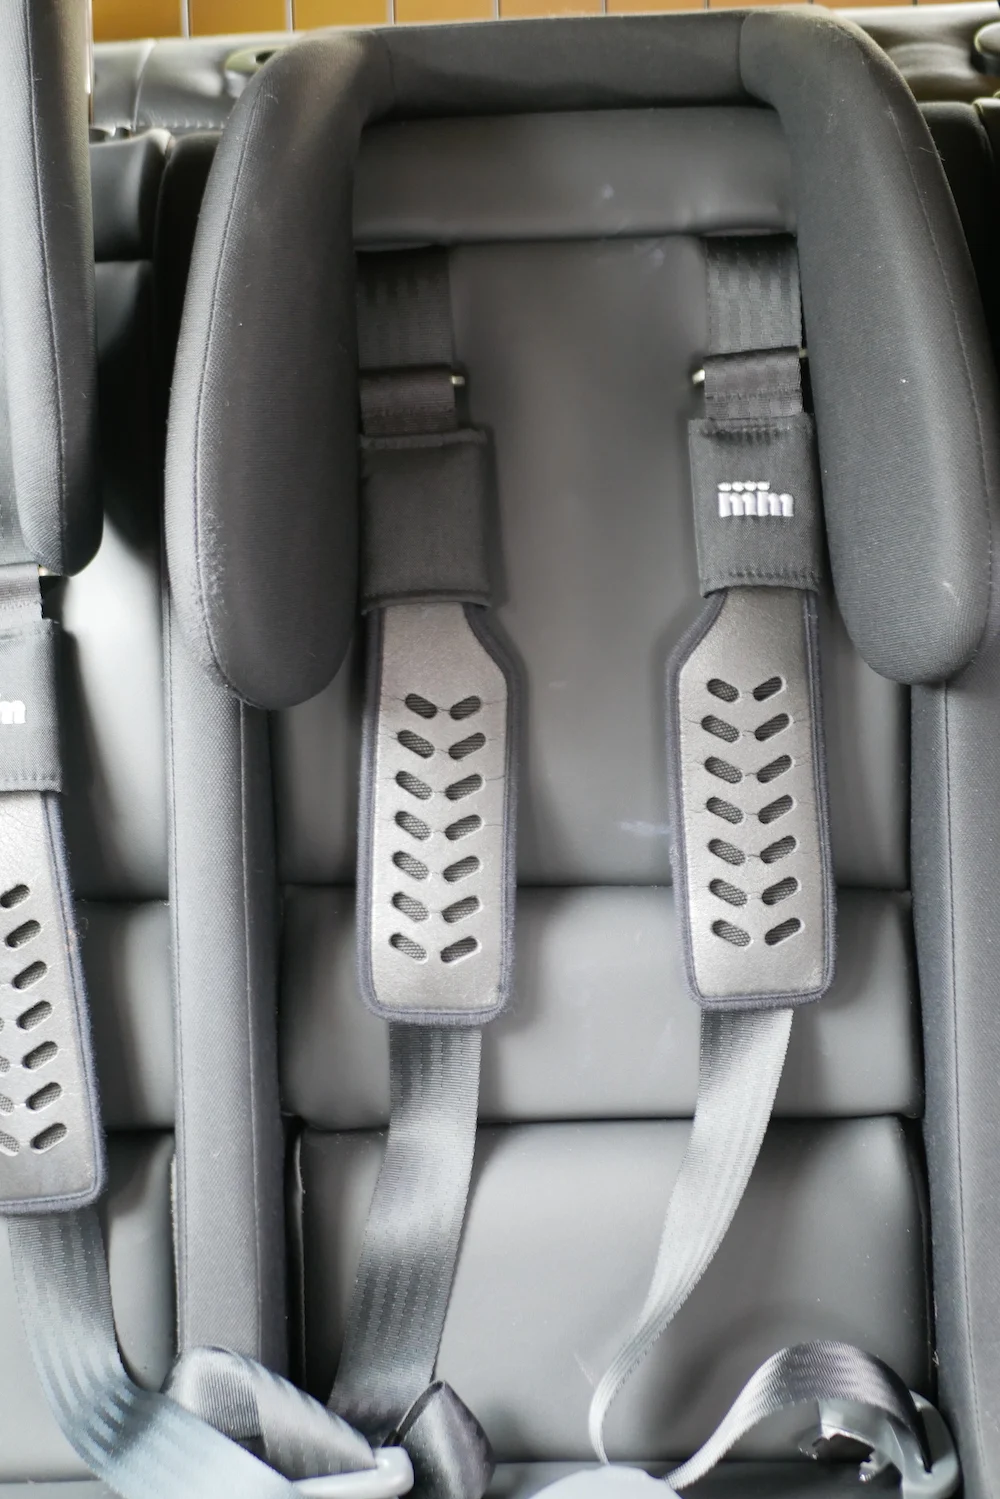 Multimac car seat